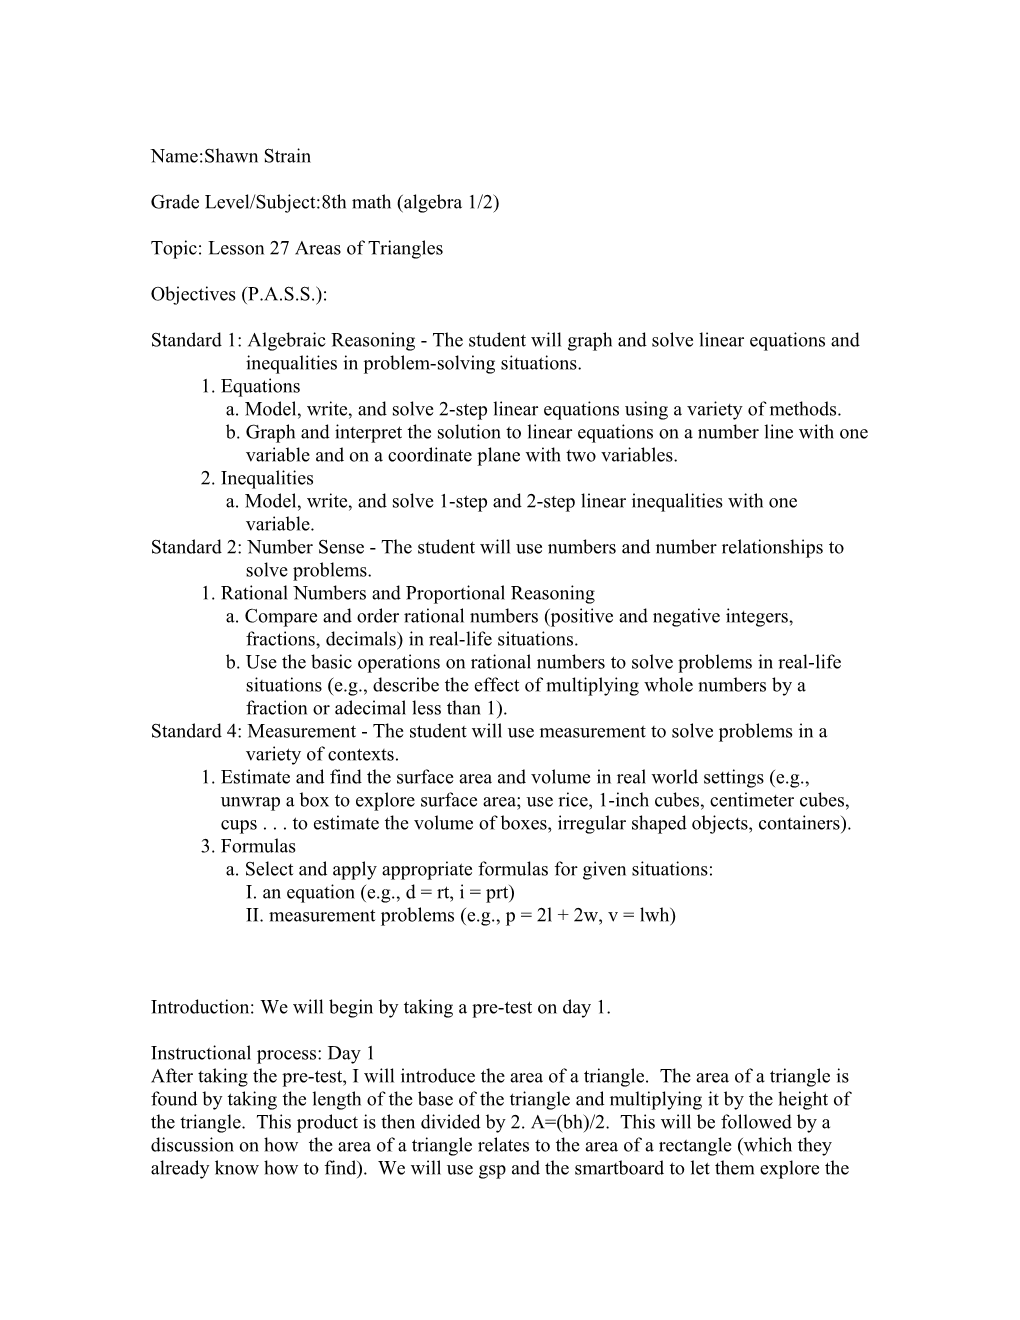 Grade Level/Subject:8Th Math (Algebra 1/2)